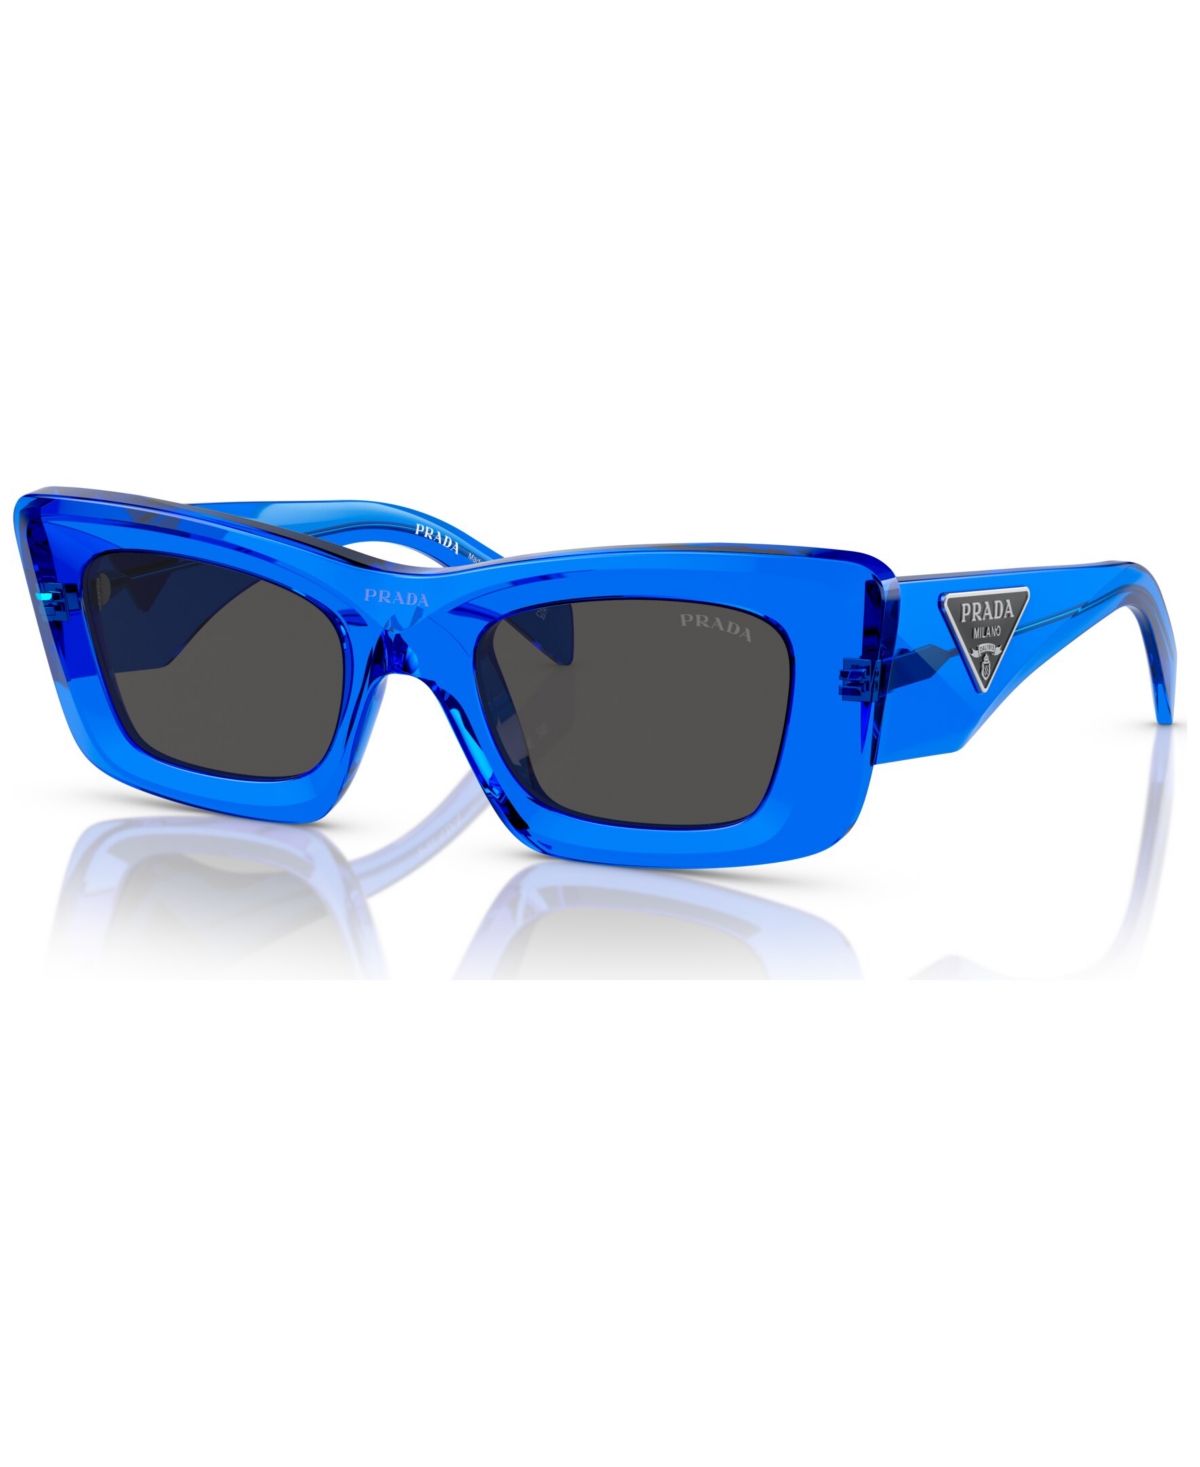 Prada Women's Sunglasses, Pr 13zs In Crystal Electric Blue